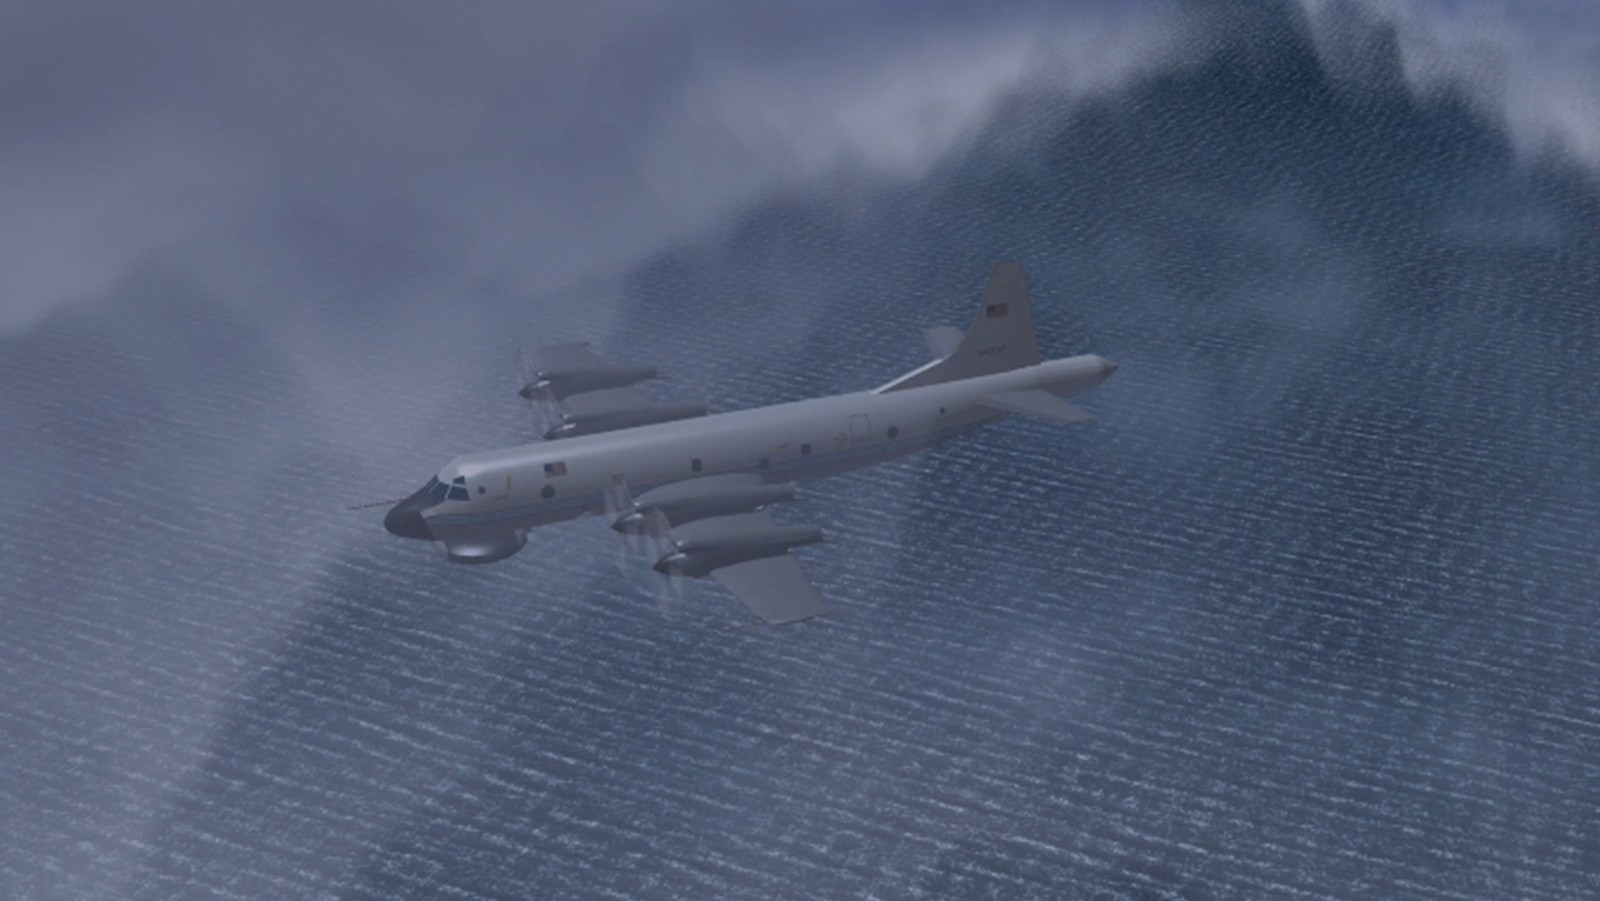 Dropsonde Animation Image of the P-3. Photo Credit: NOAA.